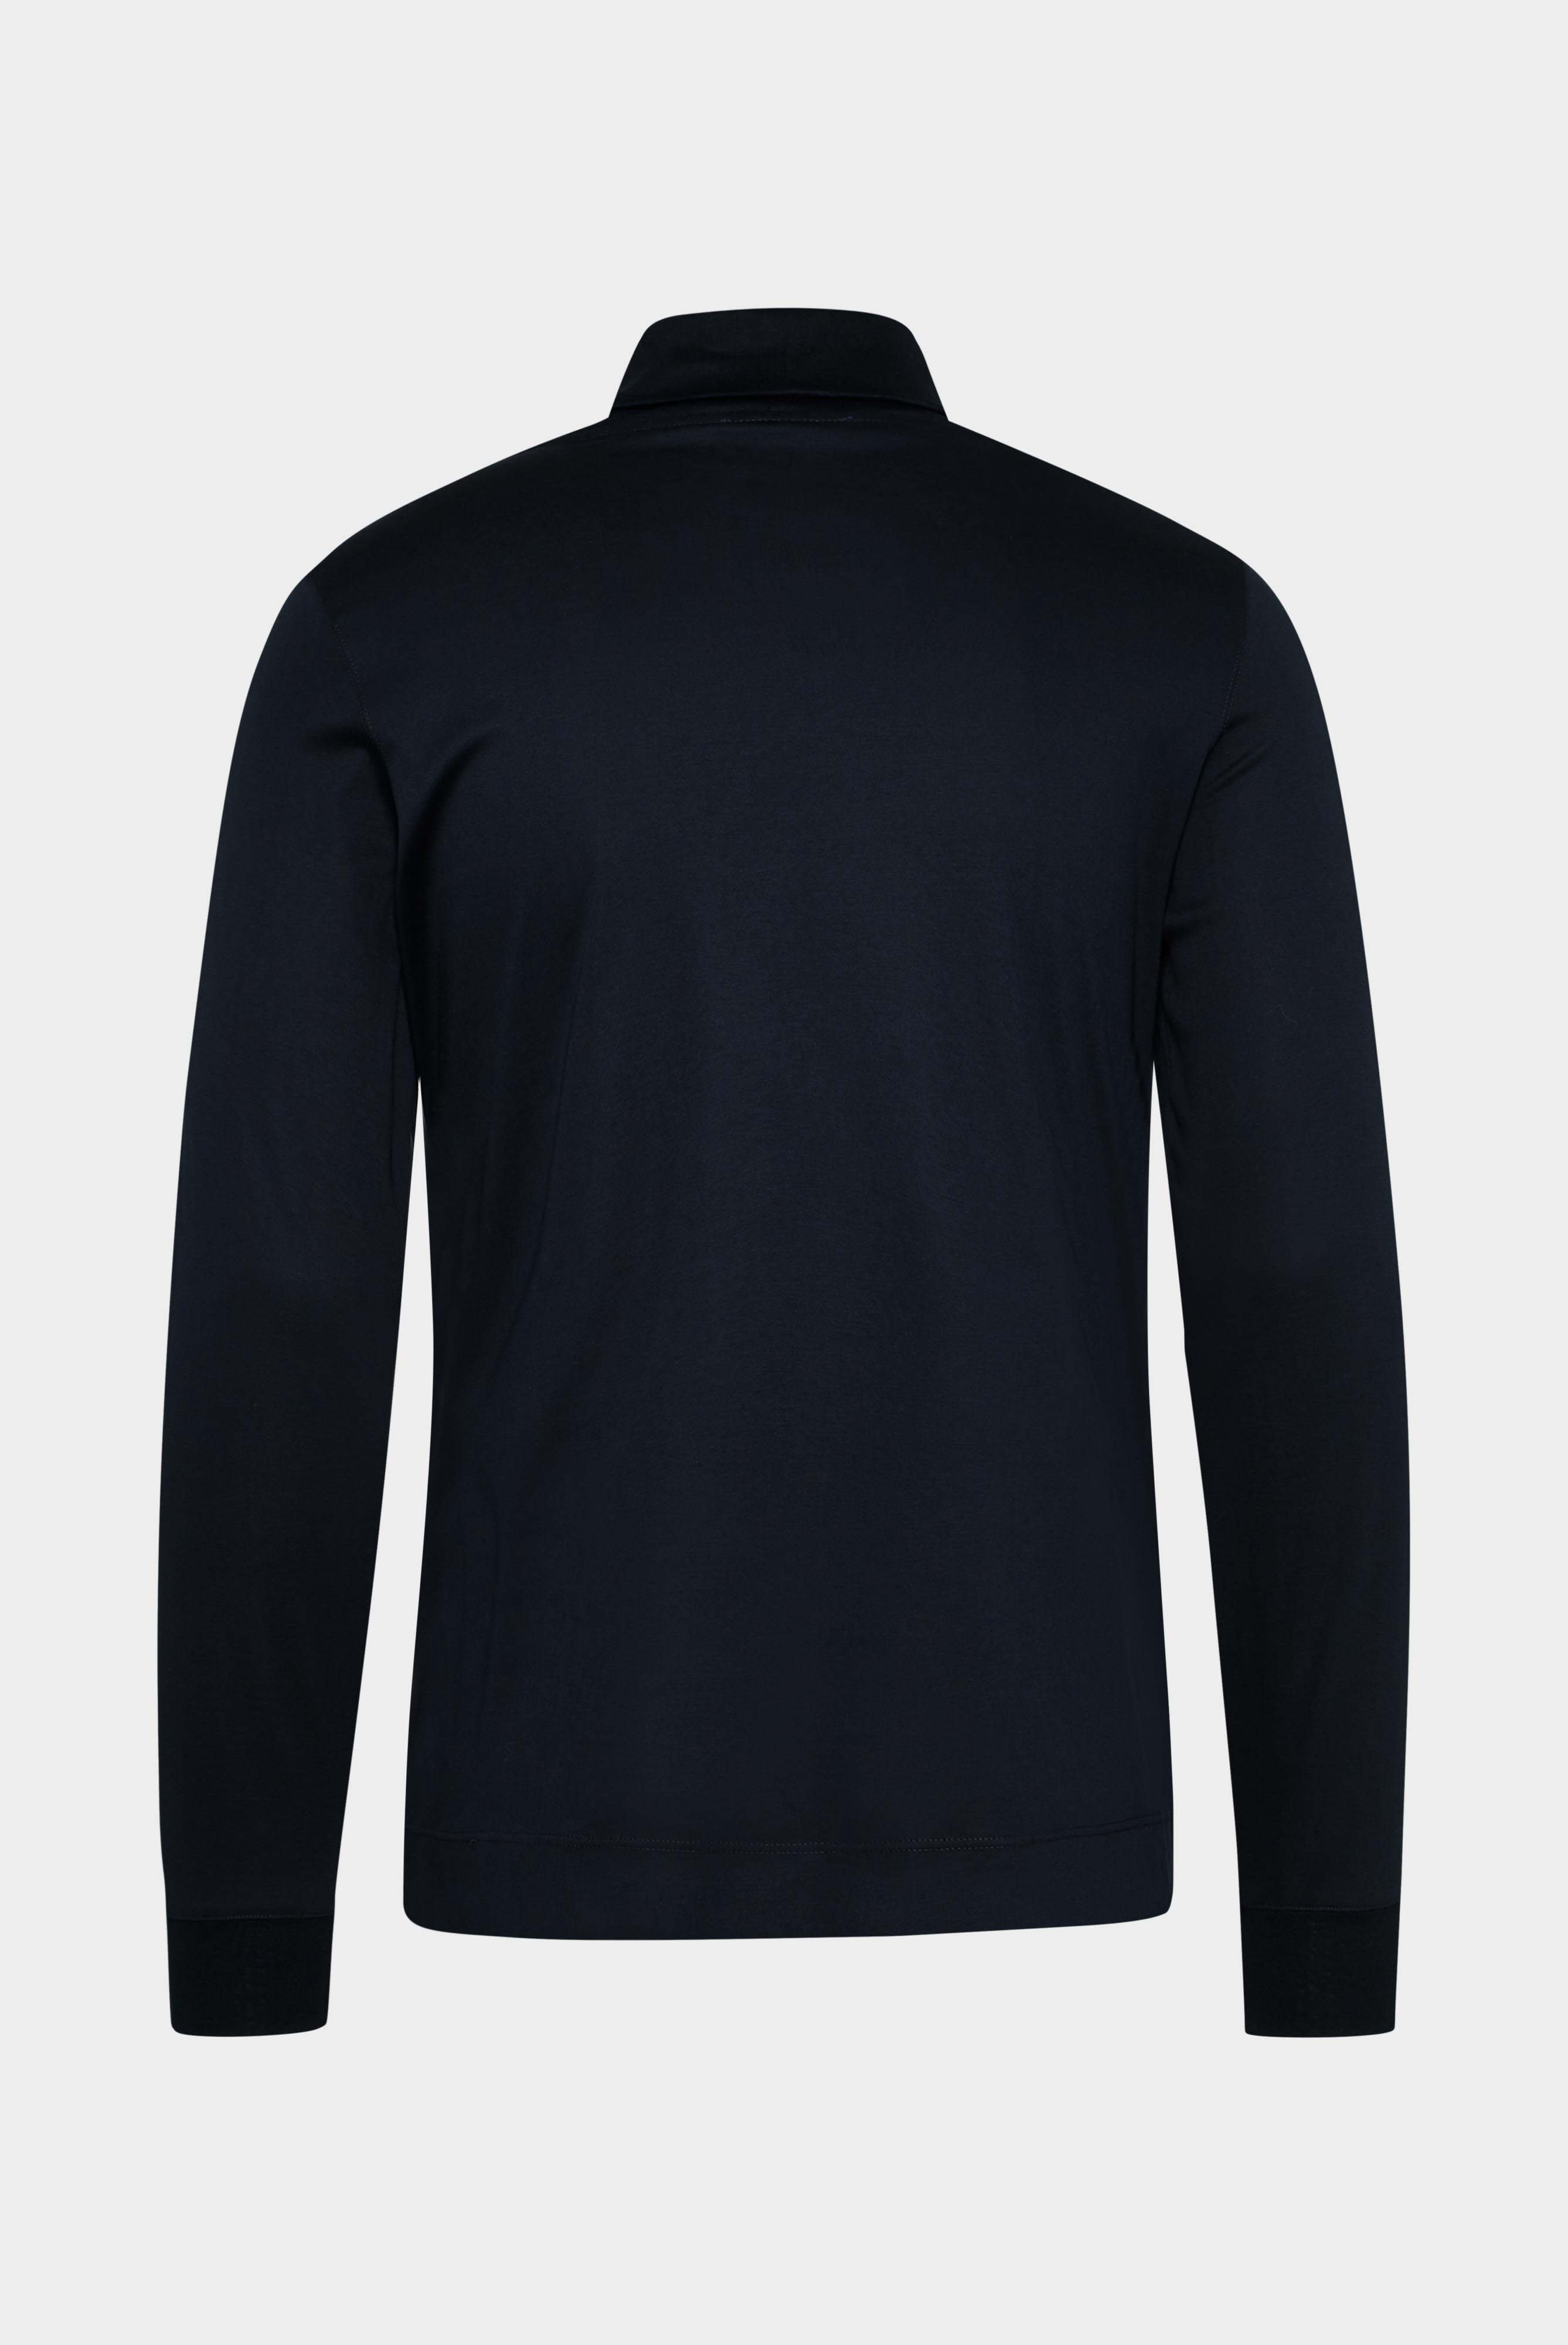 T-Shirts+Swiss Cotton Jersey Turtleneck Shirt+20.1719.UX.180031.790.XL